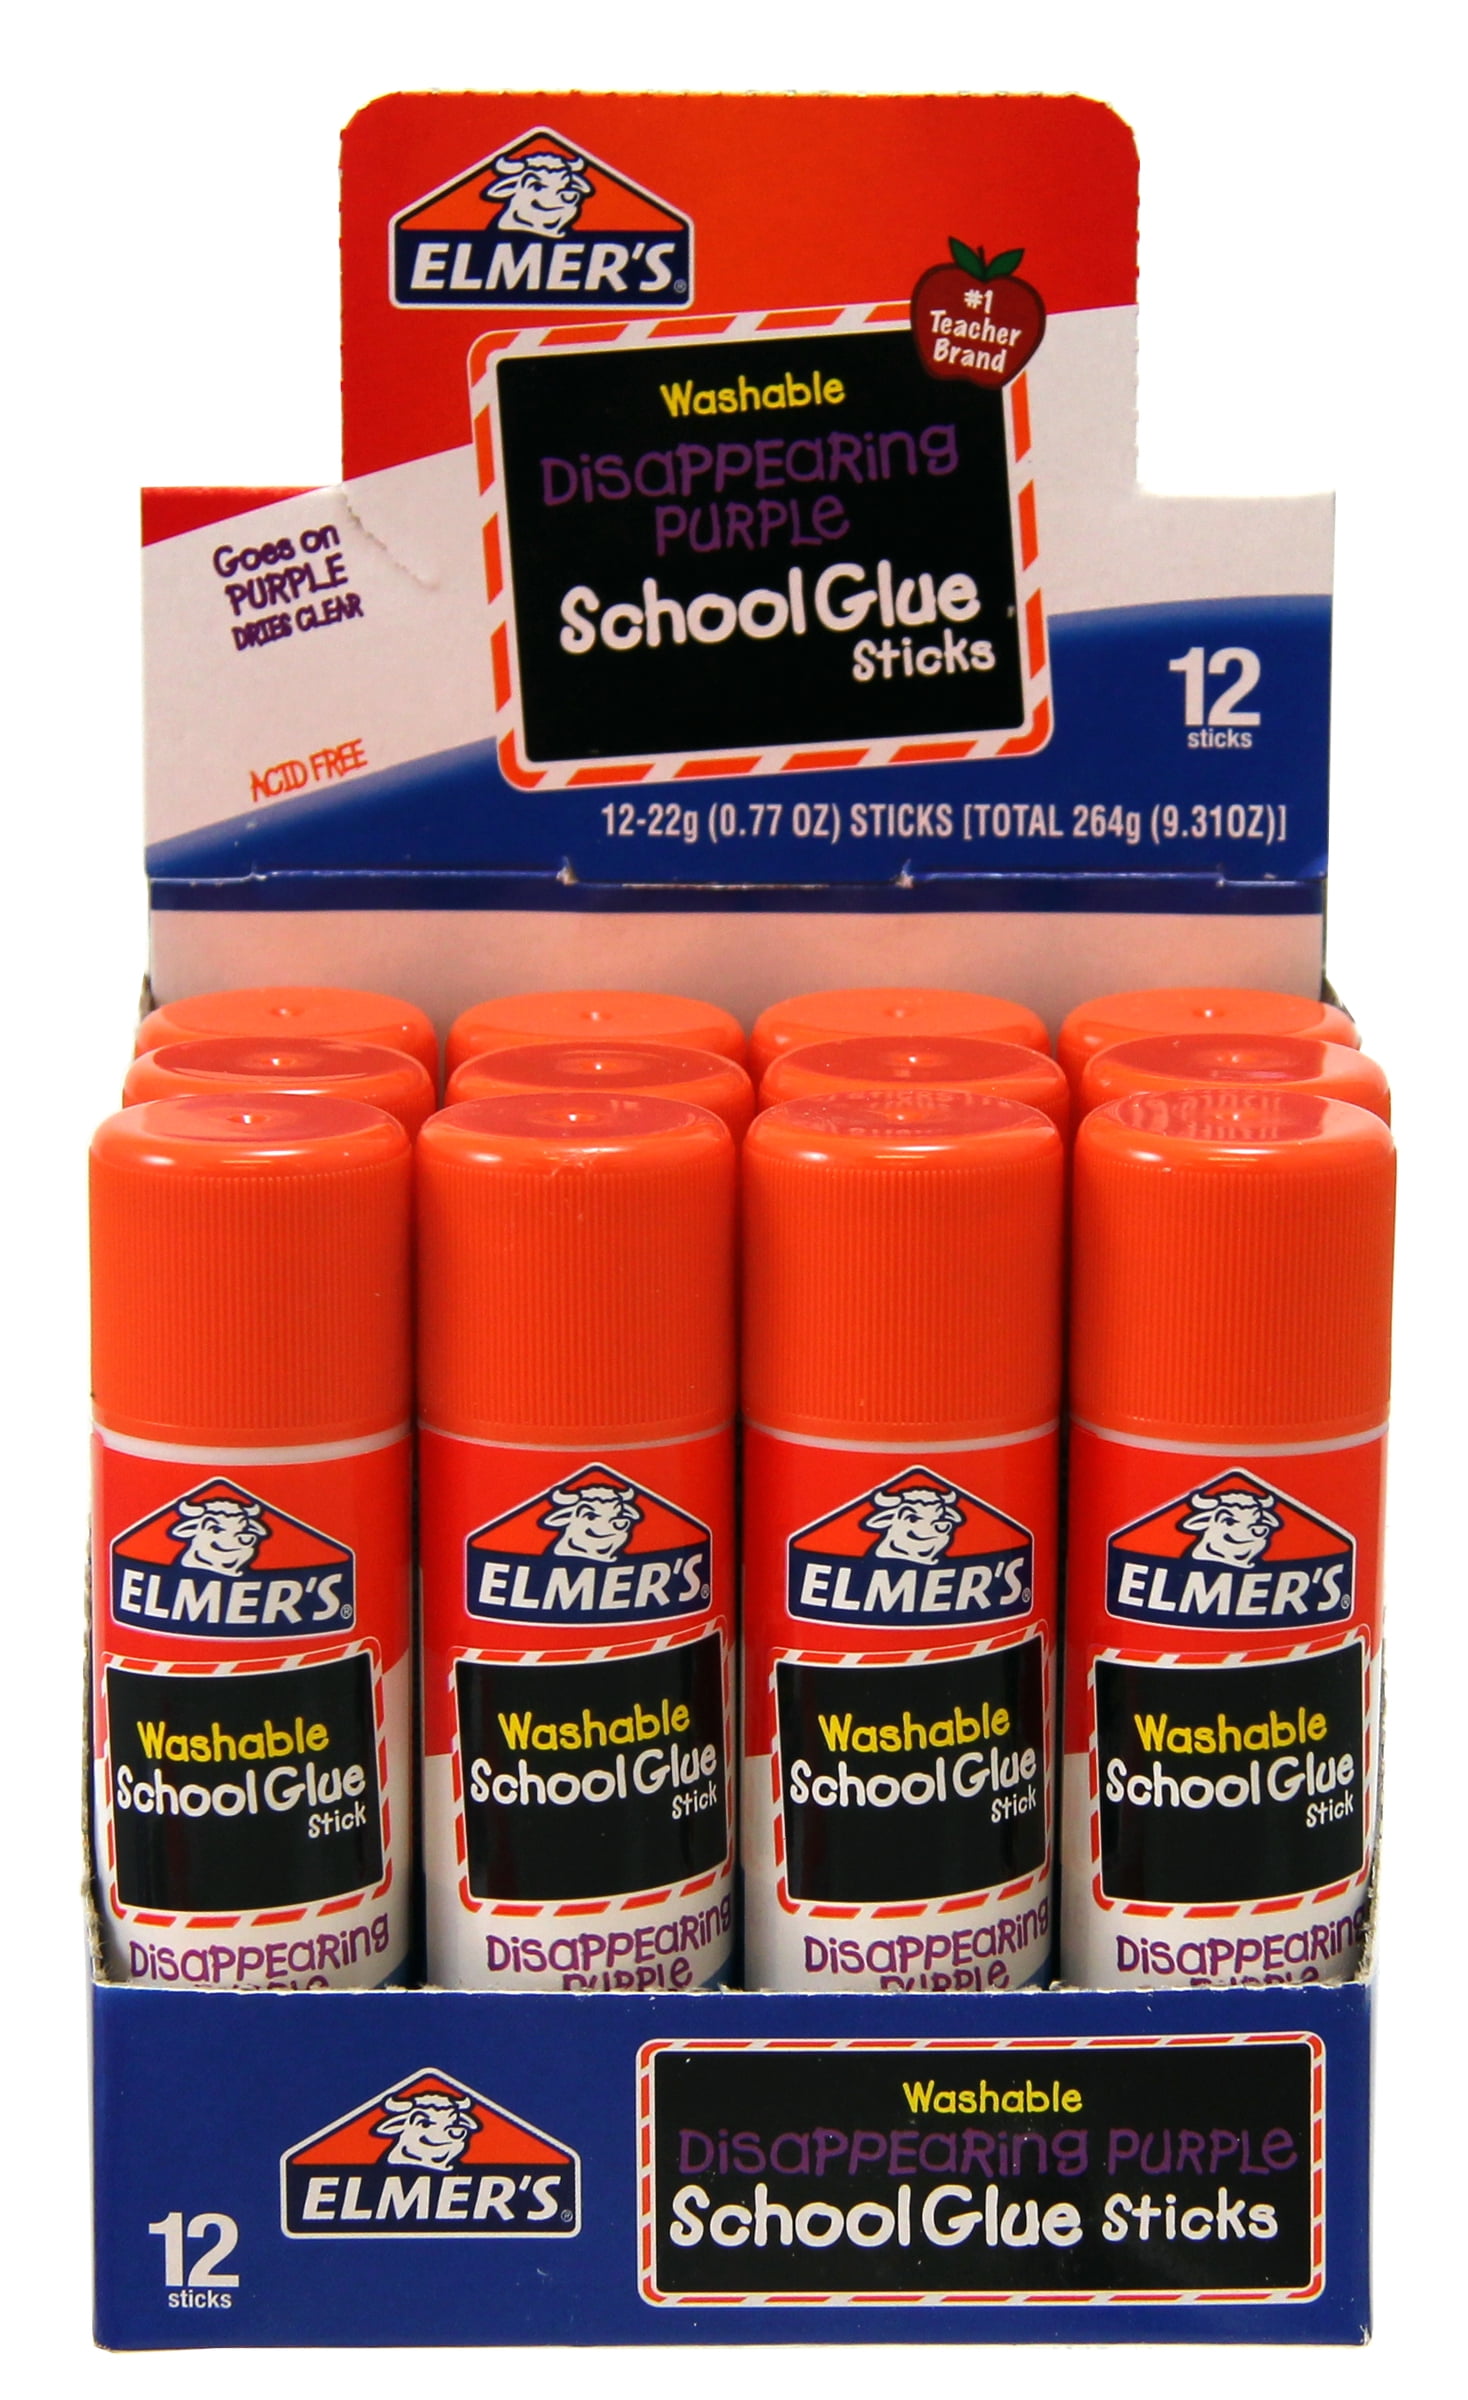 Elmer's Disappearing Purple School Glue Sticks, Washable, 6 Grams